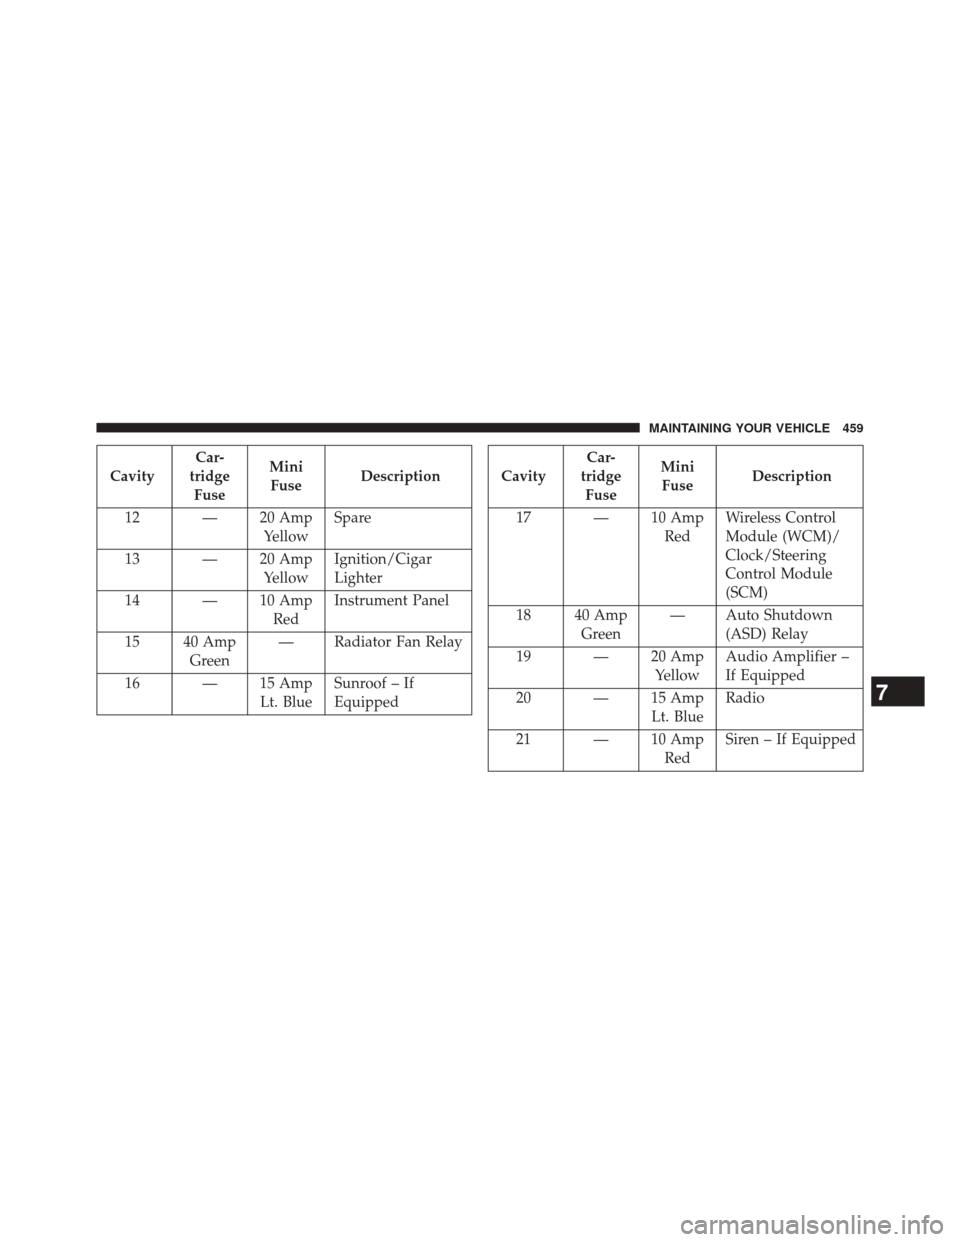 CHRYSLER 200 2014 1.G Owners Manual CavityCar-
tridge Fuse Mini
Fuse Description
12 — 20 Amp YellowSpare
13 — 20 Amp YellowIgnition/Cigar
Lighter
14 — 10 Amp RedInstrument Panel
15 40 Amp Green — Radiator Fan Relay
16 — 15 Amp